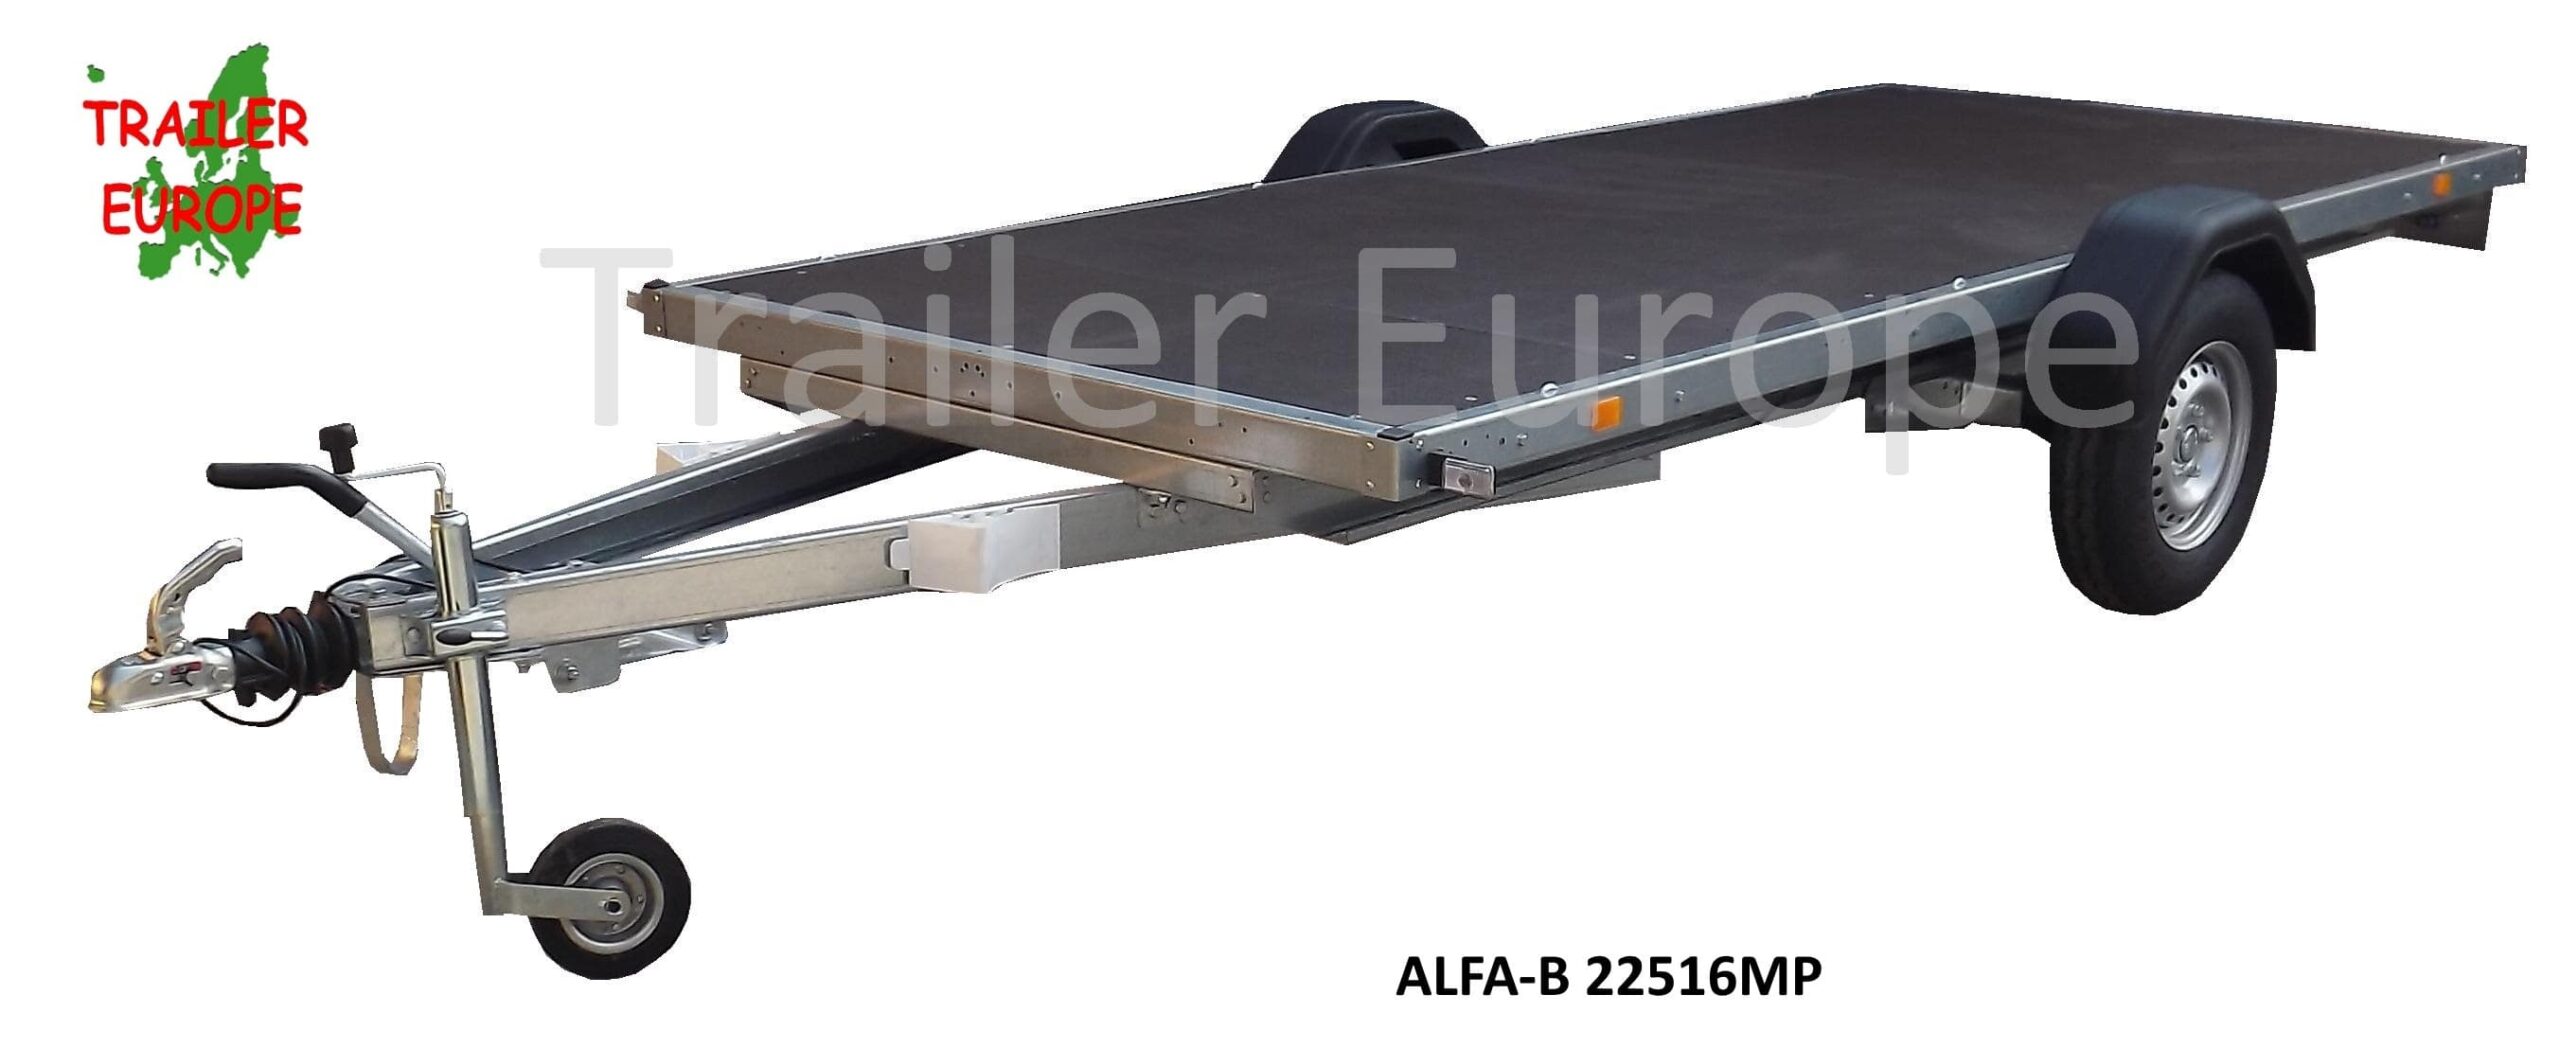 trailereurope ALFA-B 22518mp